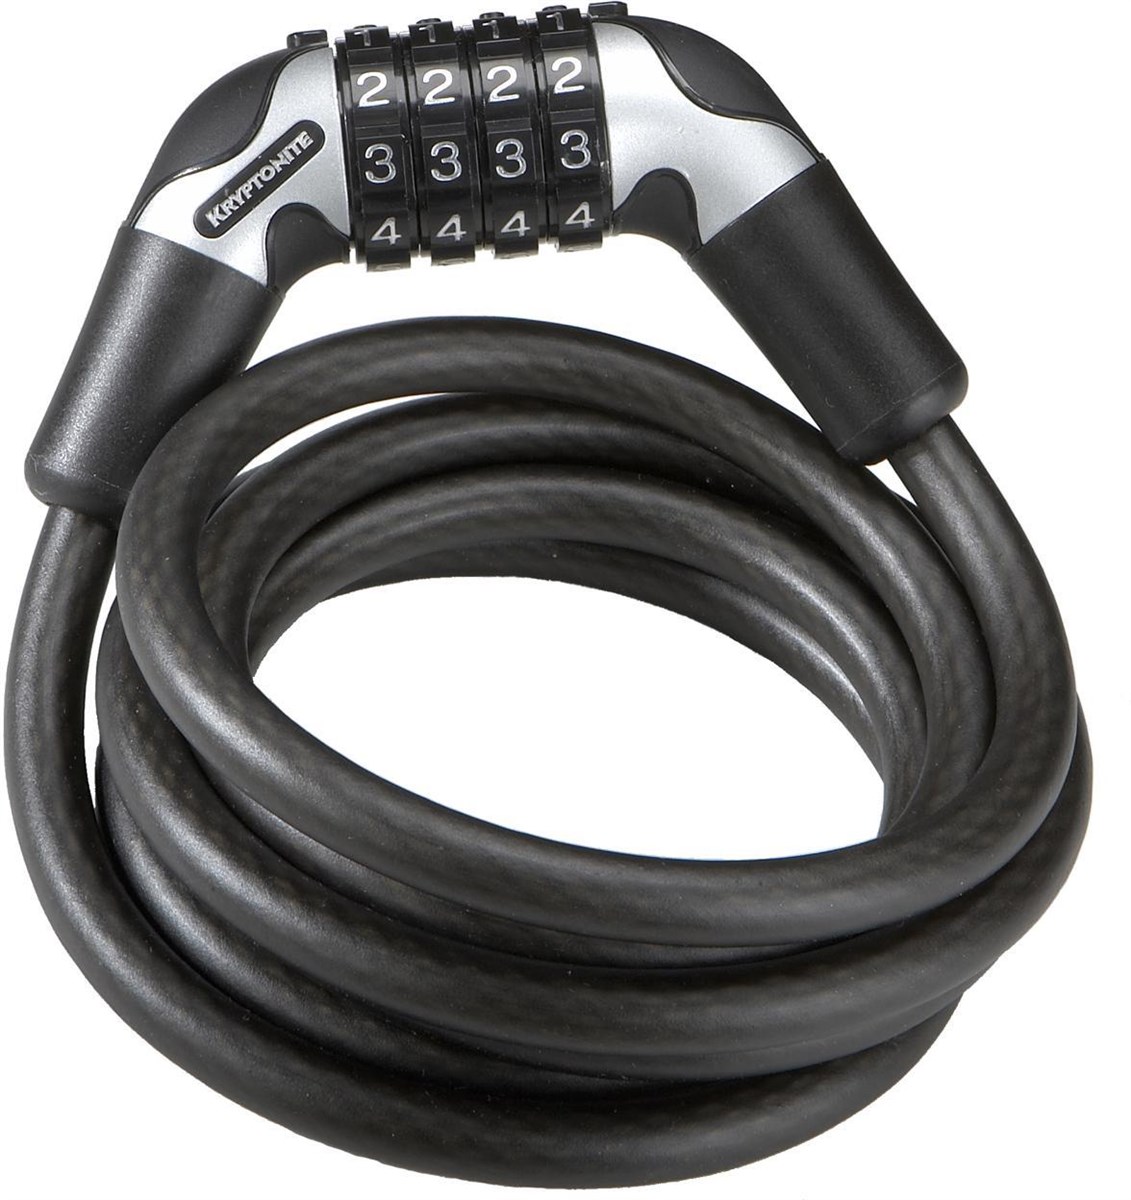 Kryptonite Kryptoflex 1018 Resettable Combo Cable Lock product image